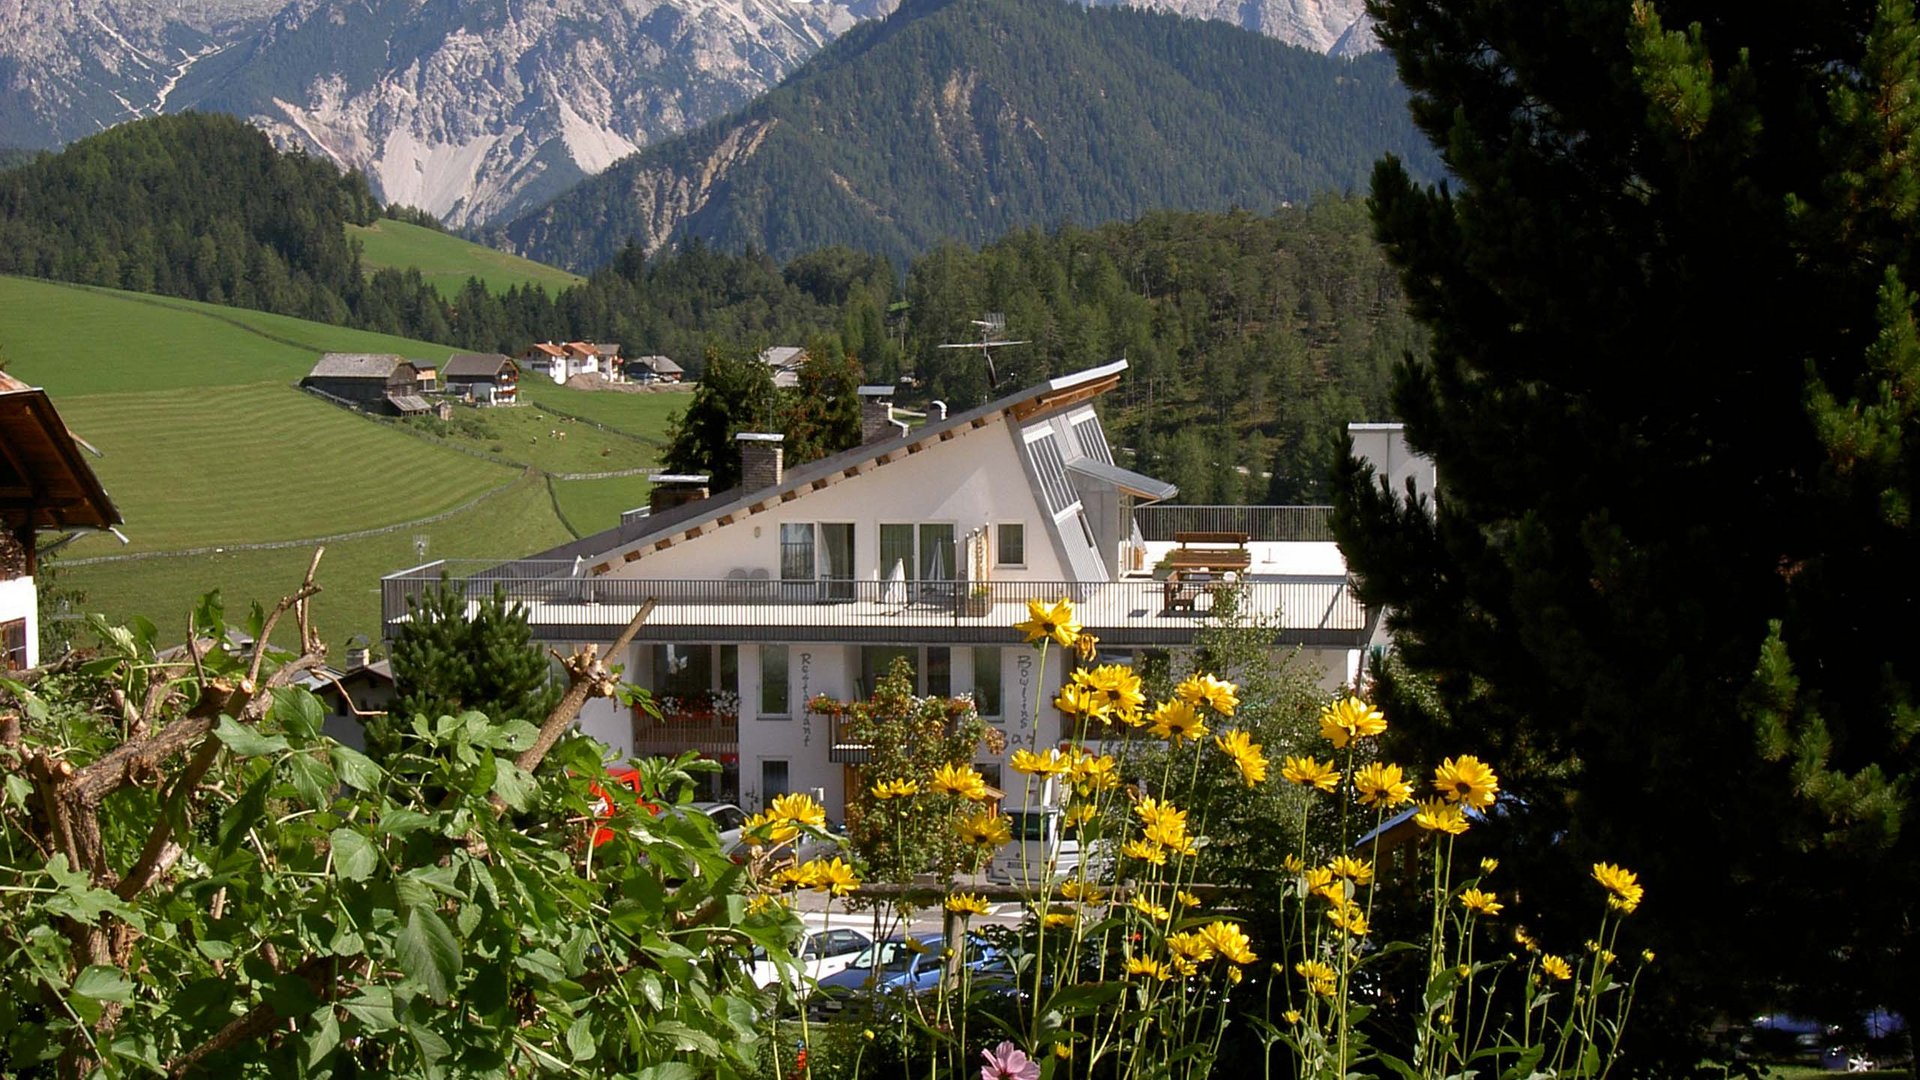 Hotel in San Martino in Badia: a retreat for adventurers